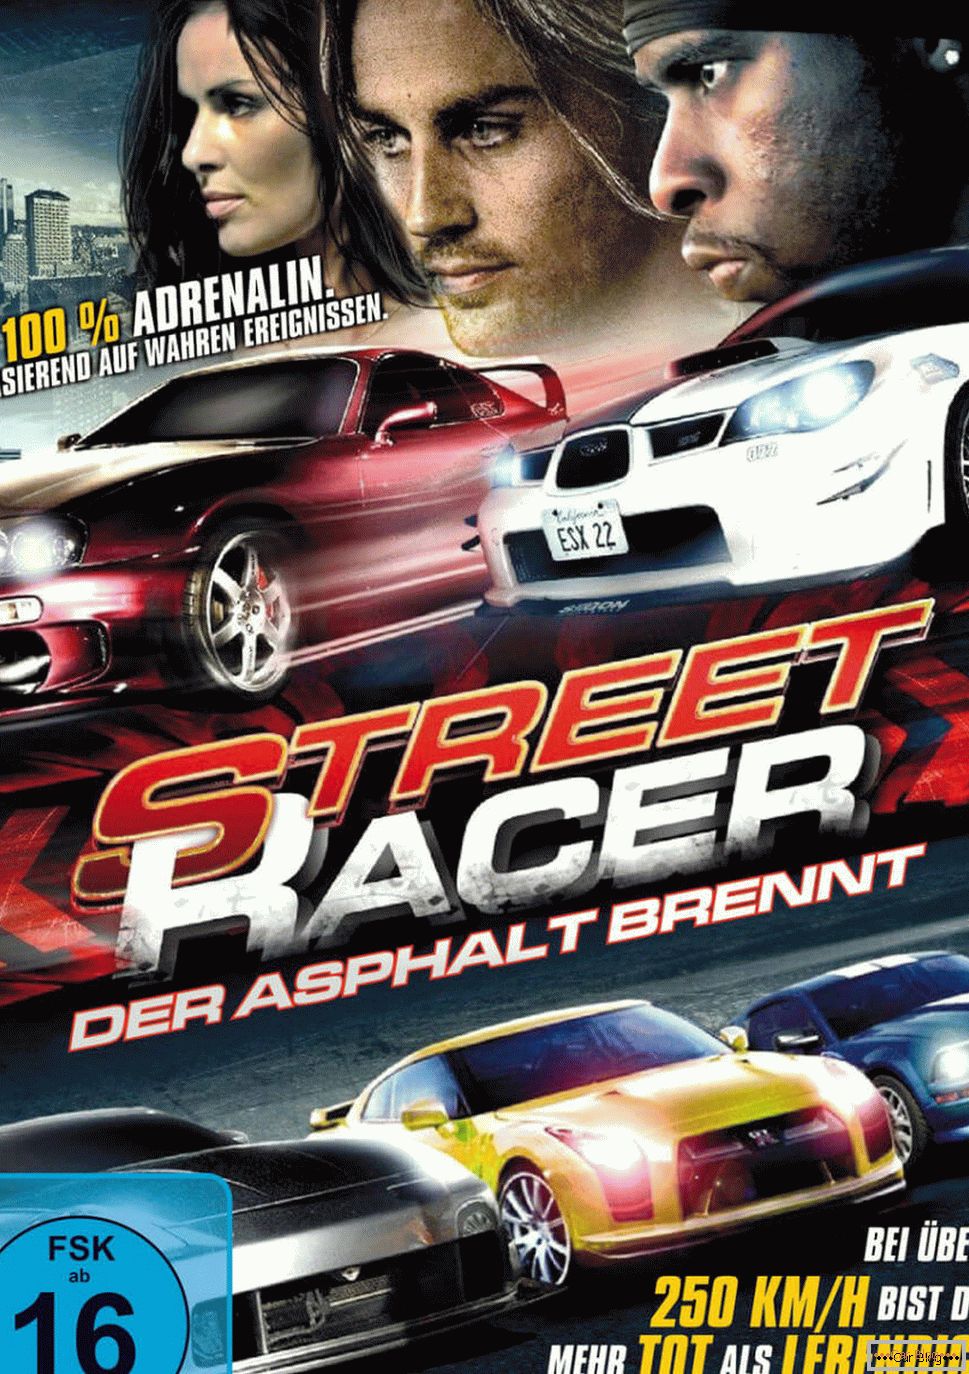 Poster per il film Street racer